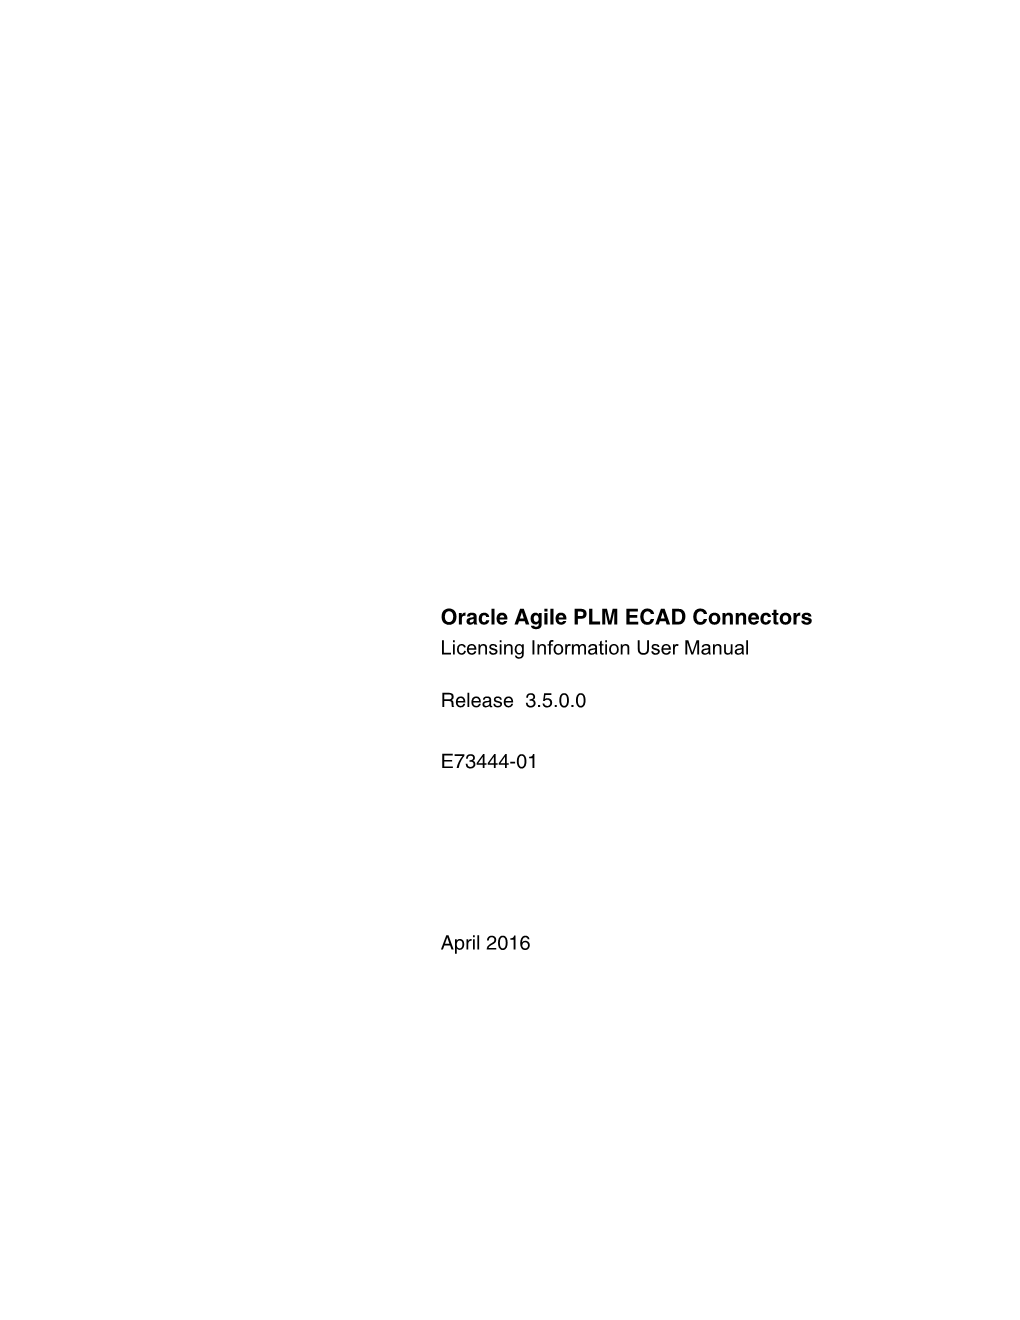 Oracle Agile PLM ECAD Connectors Licensing Information User Manual